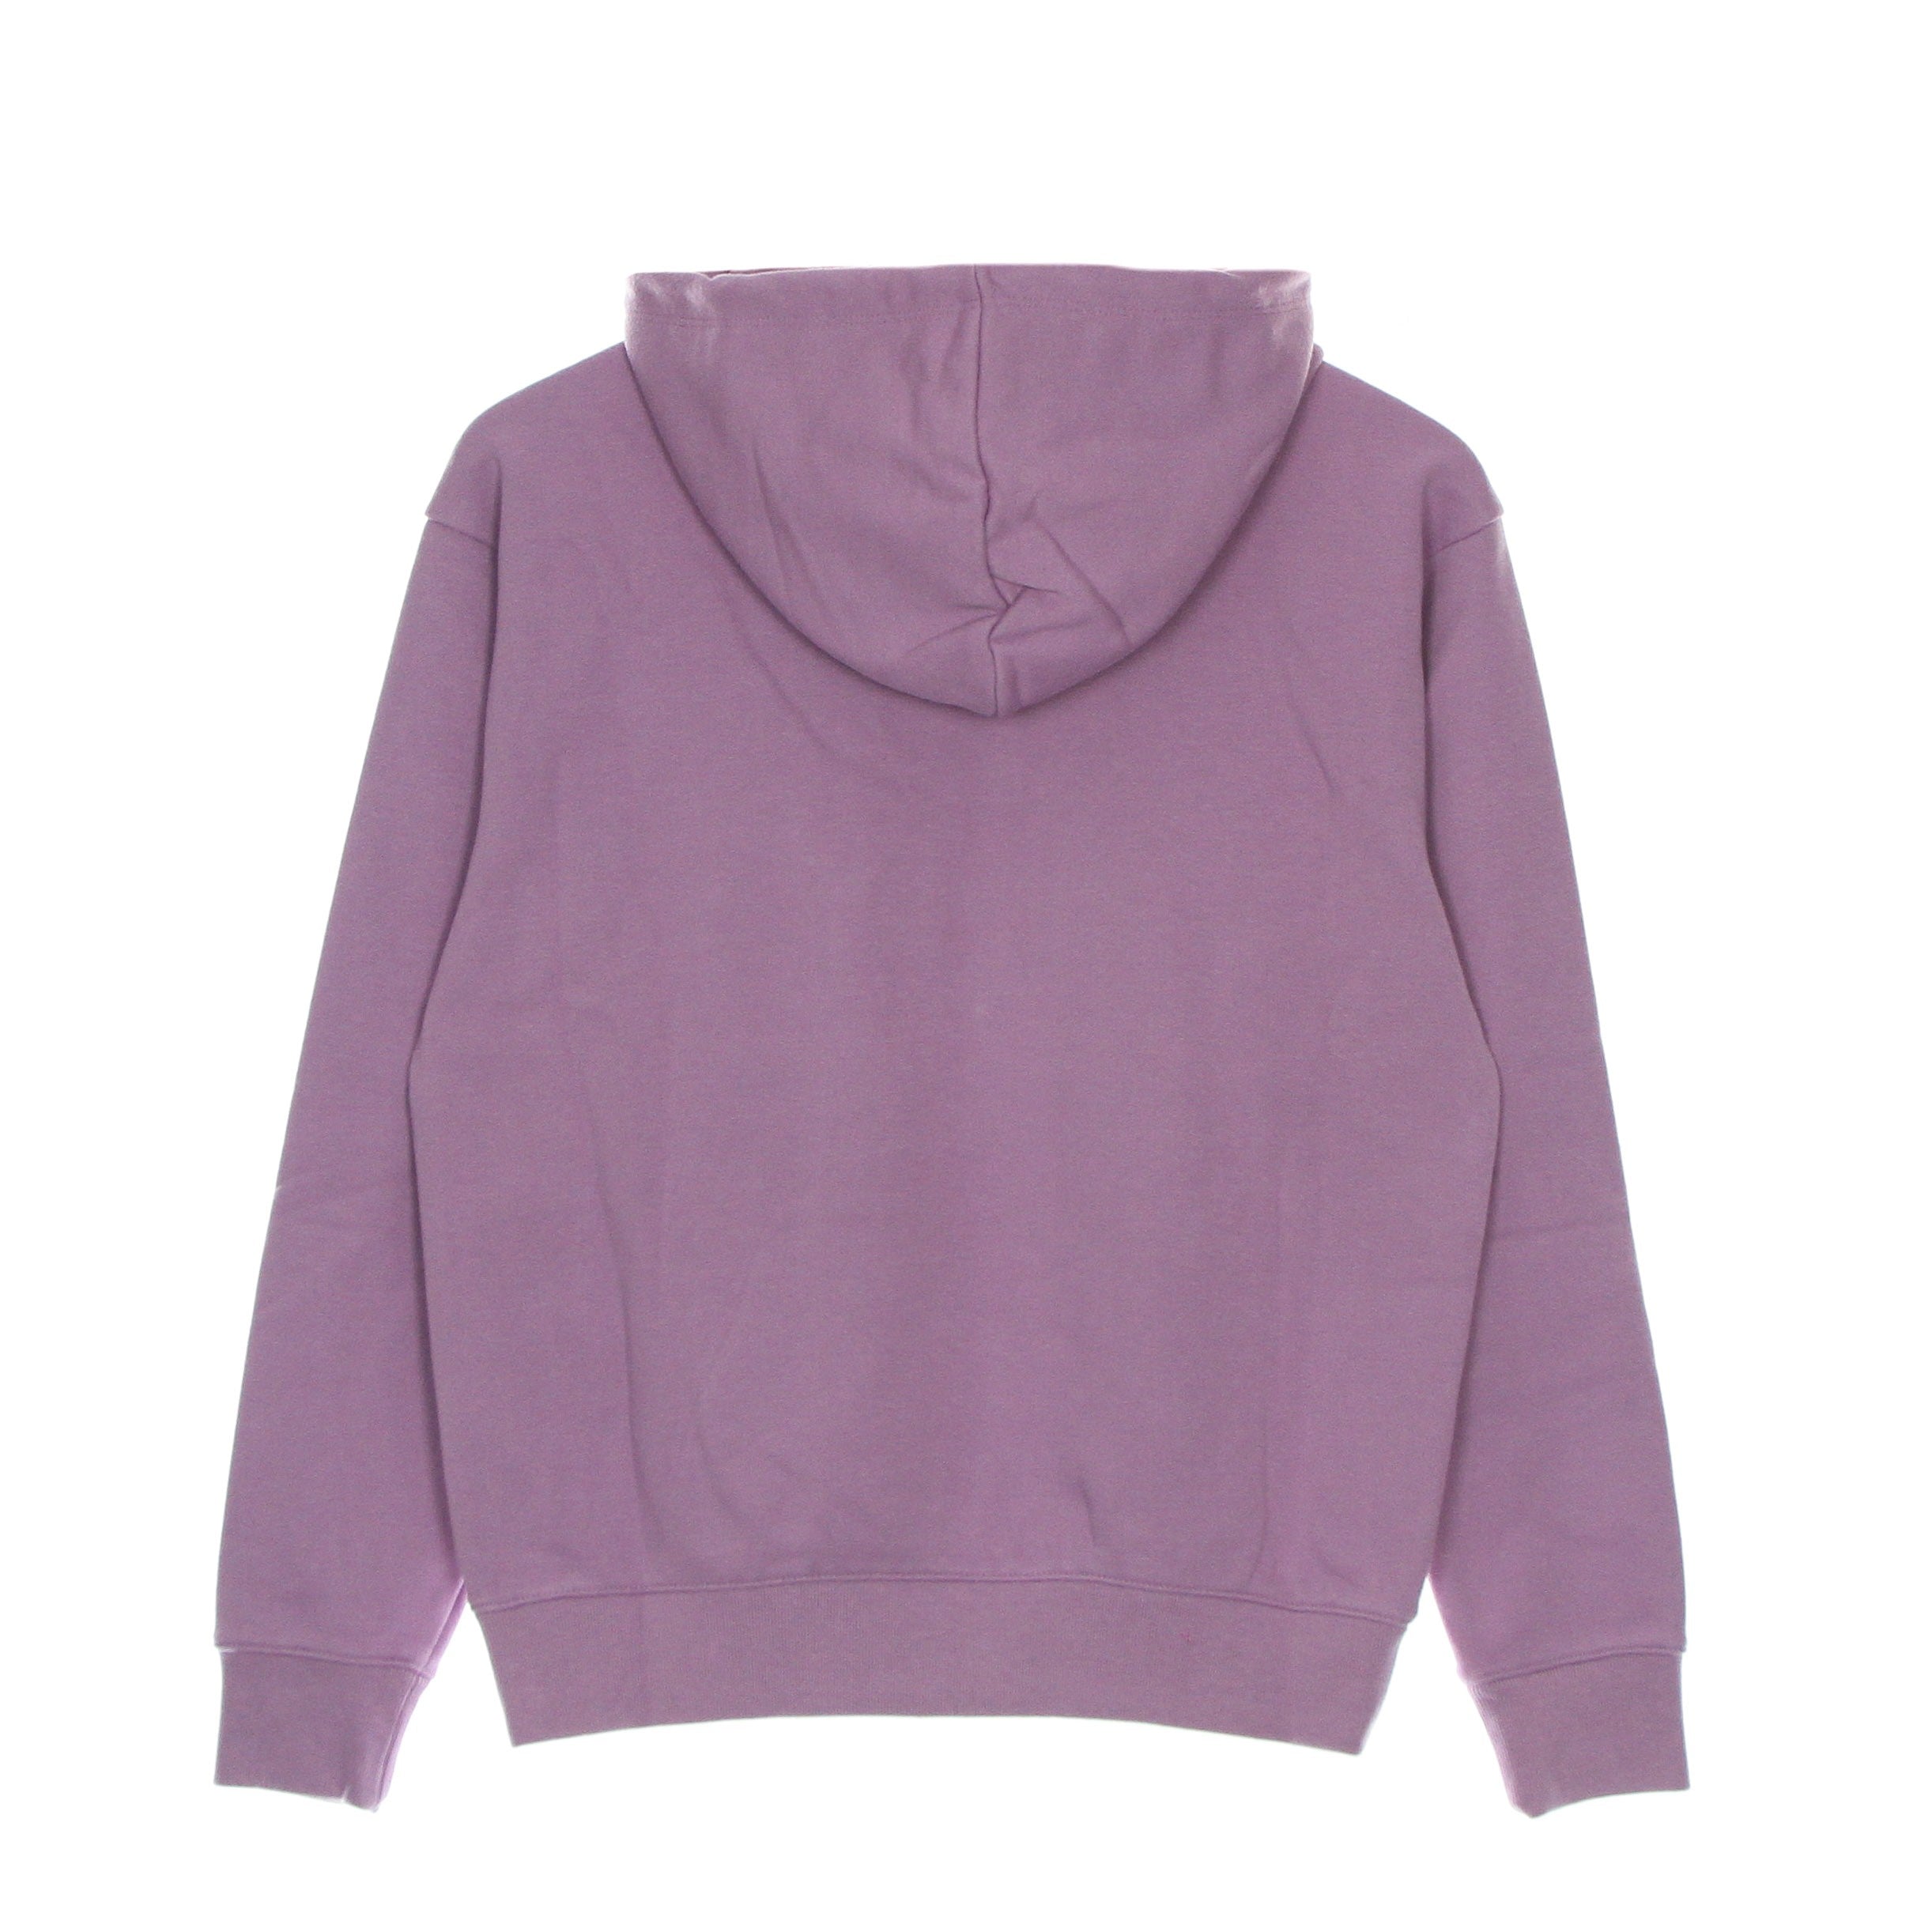 Lightweight Hooded Sweatshirt Women's Hooded Sweatshirt Violet